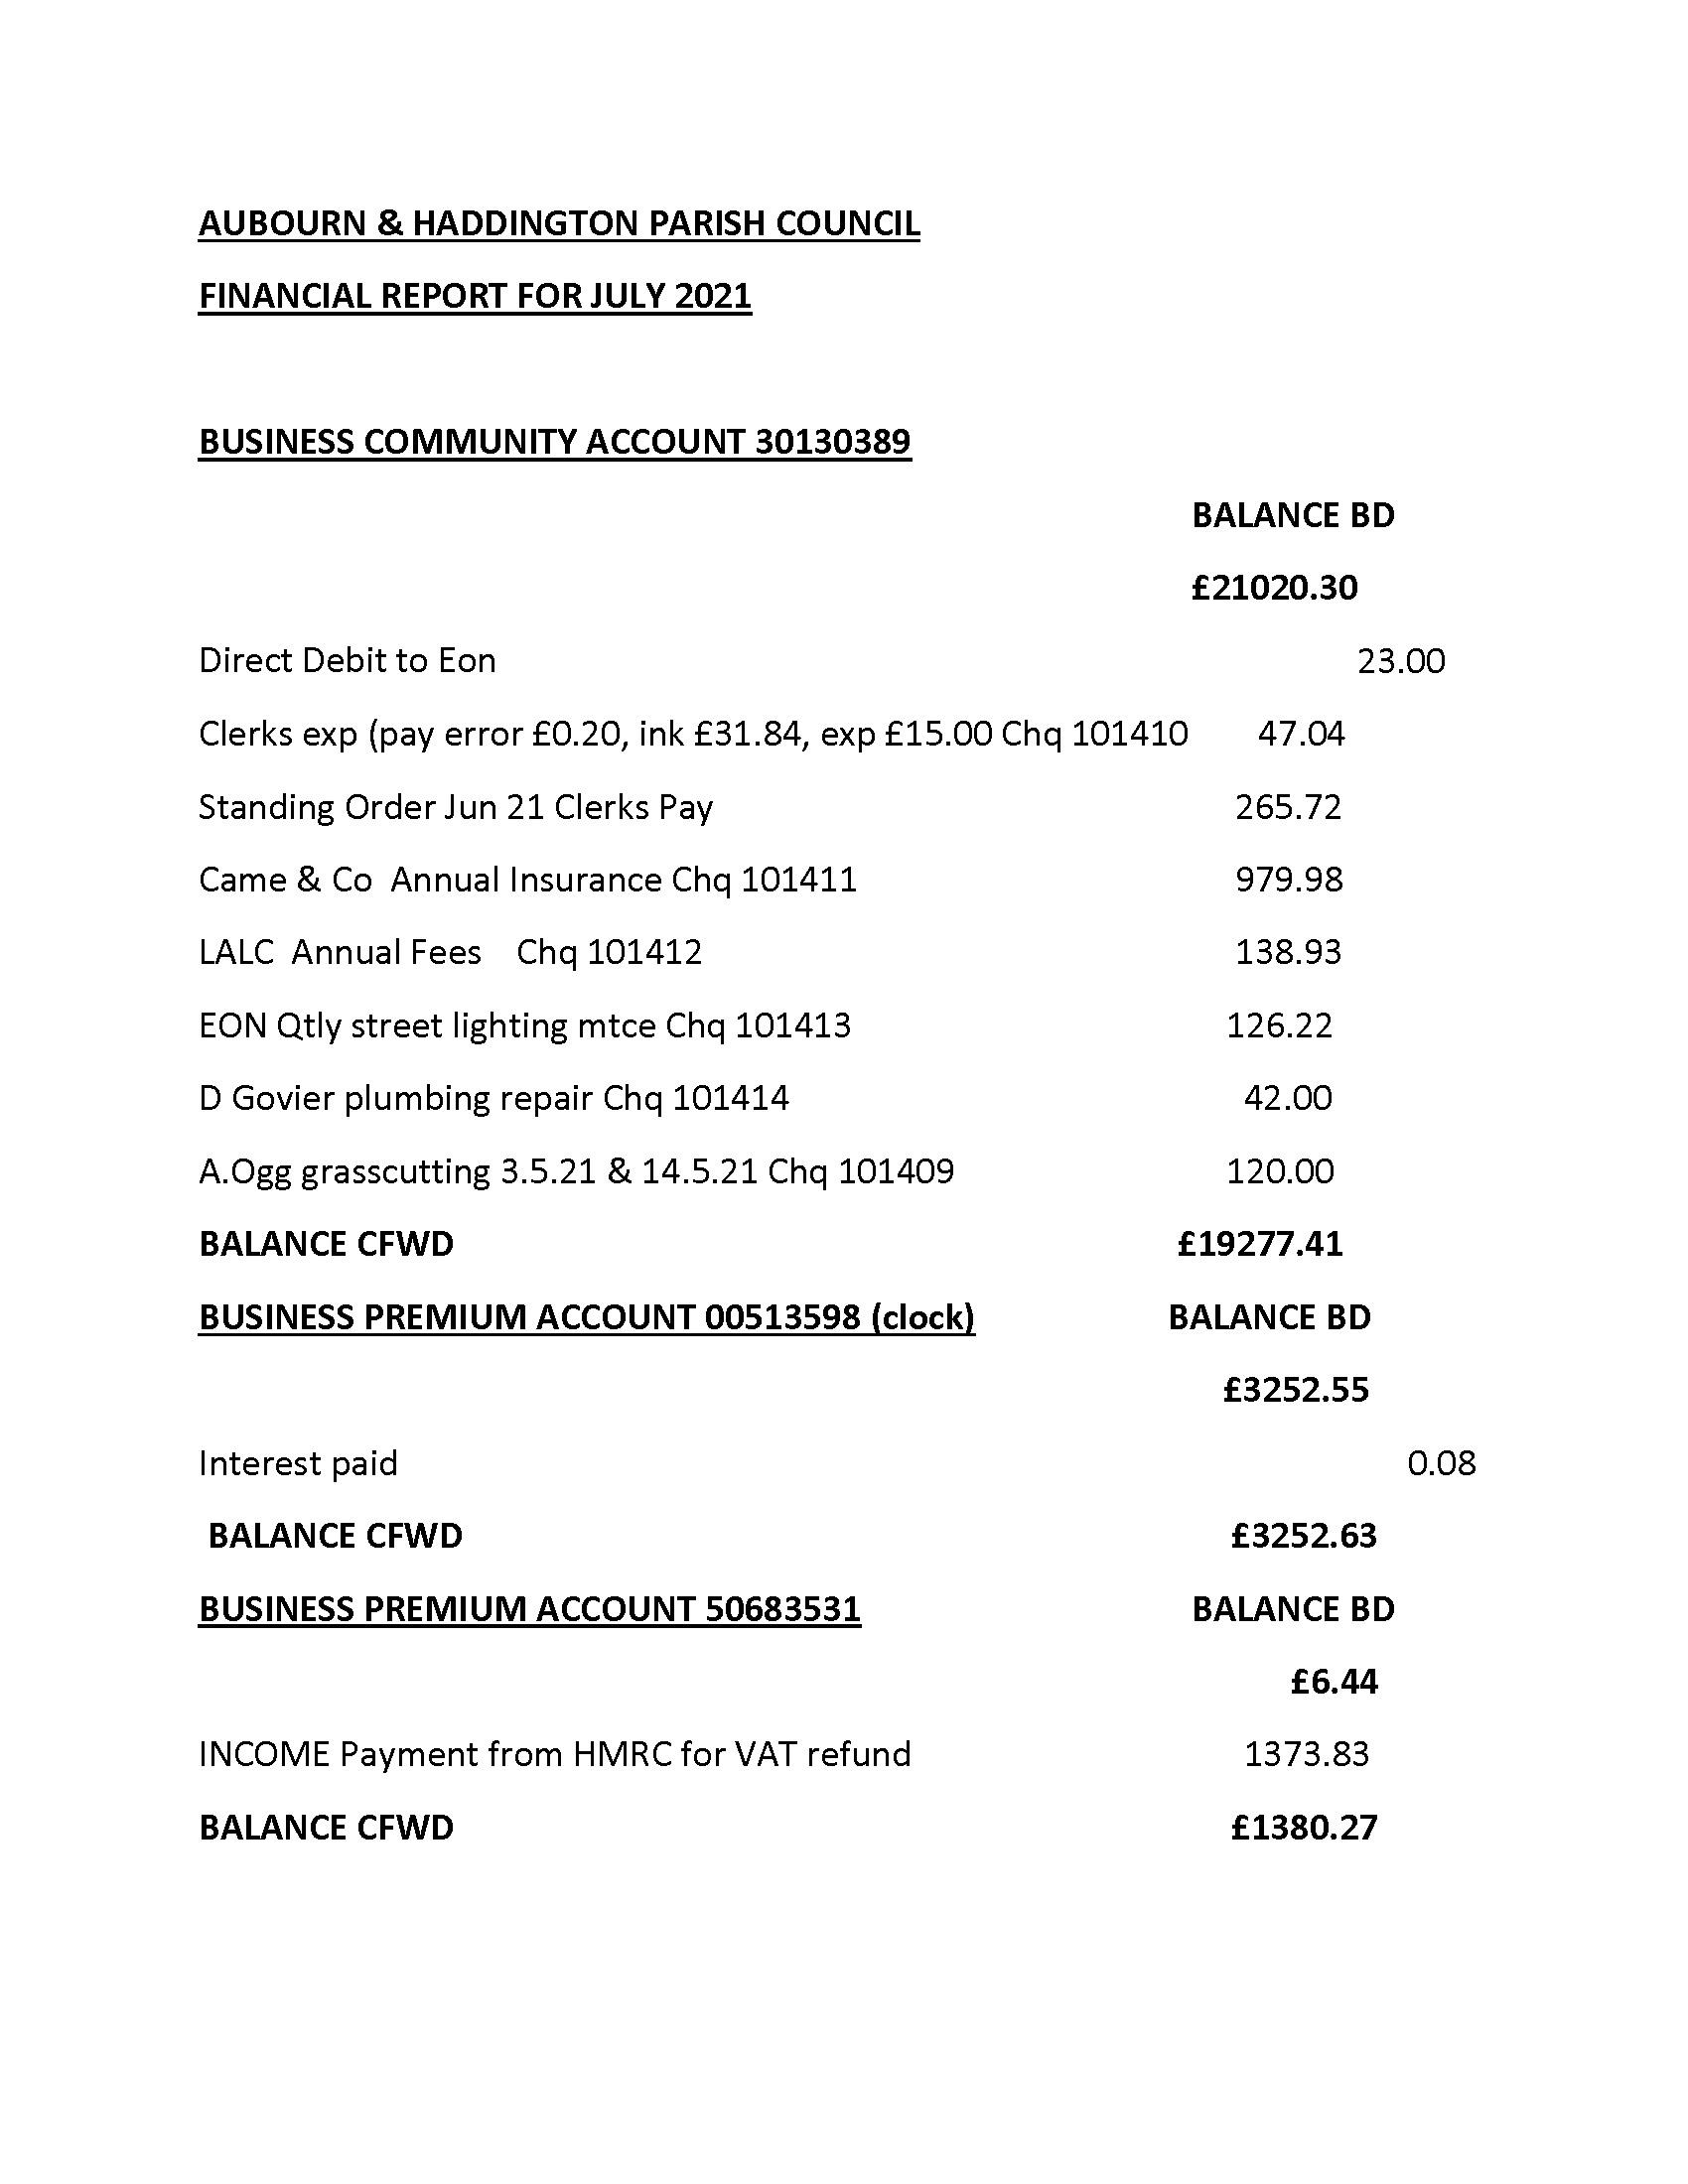 July 2021 financial accounts